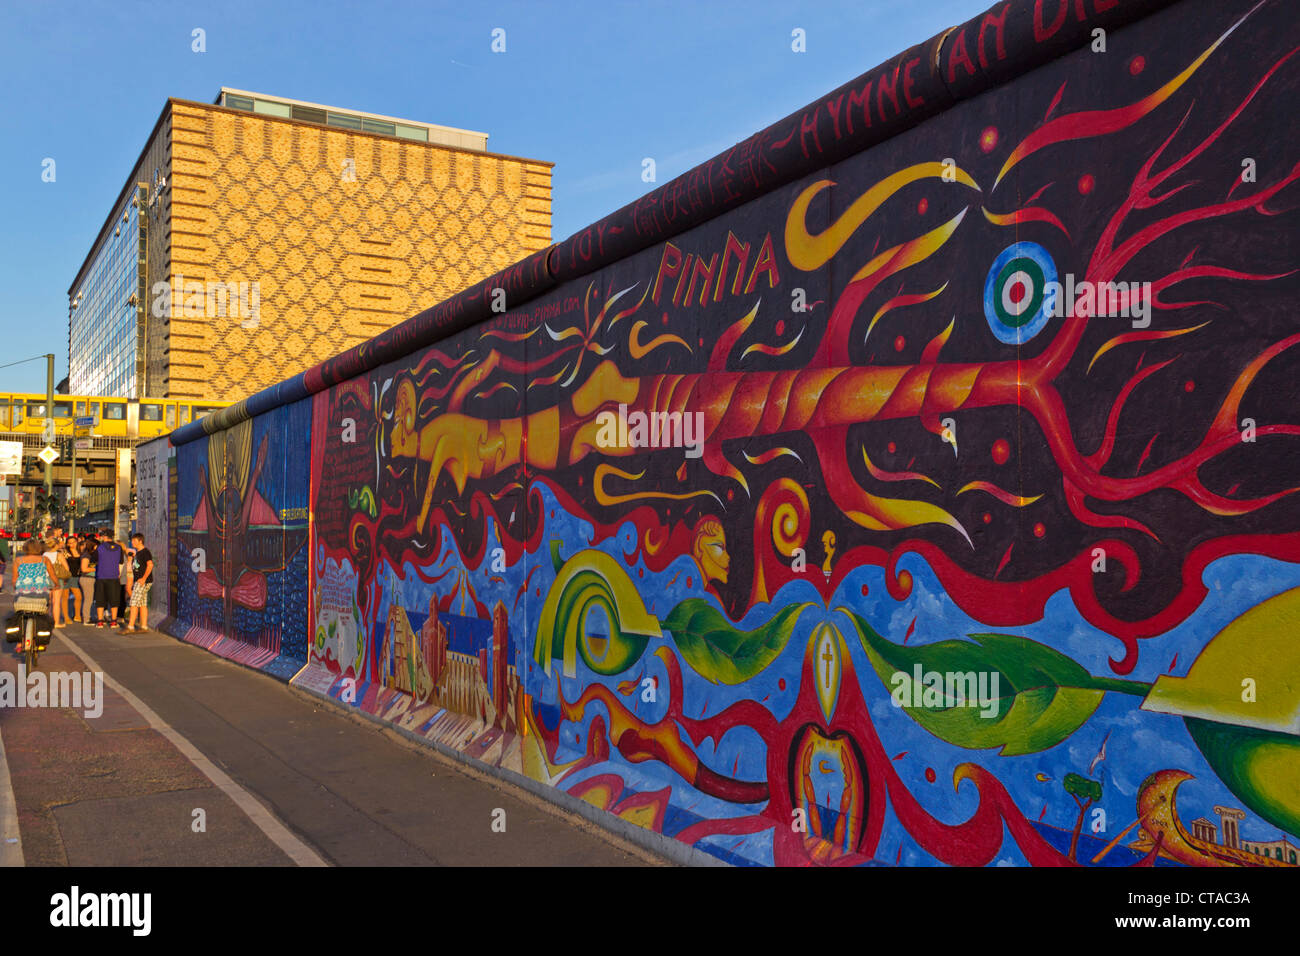 Berlin Wall mural, East Side Gallery, Berlin, Germany, Europe Stock Photo